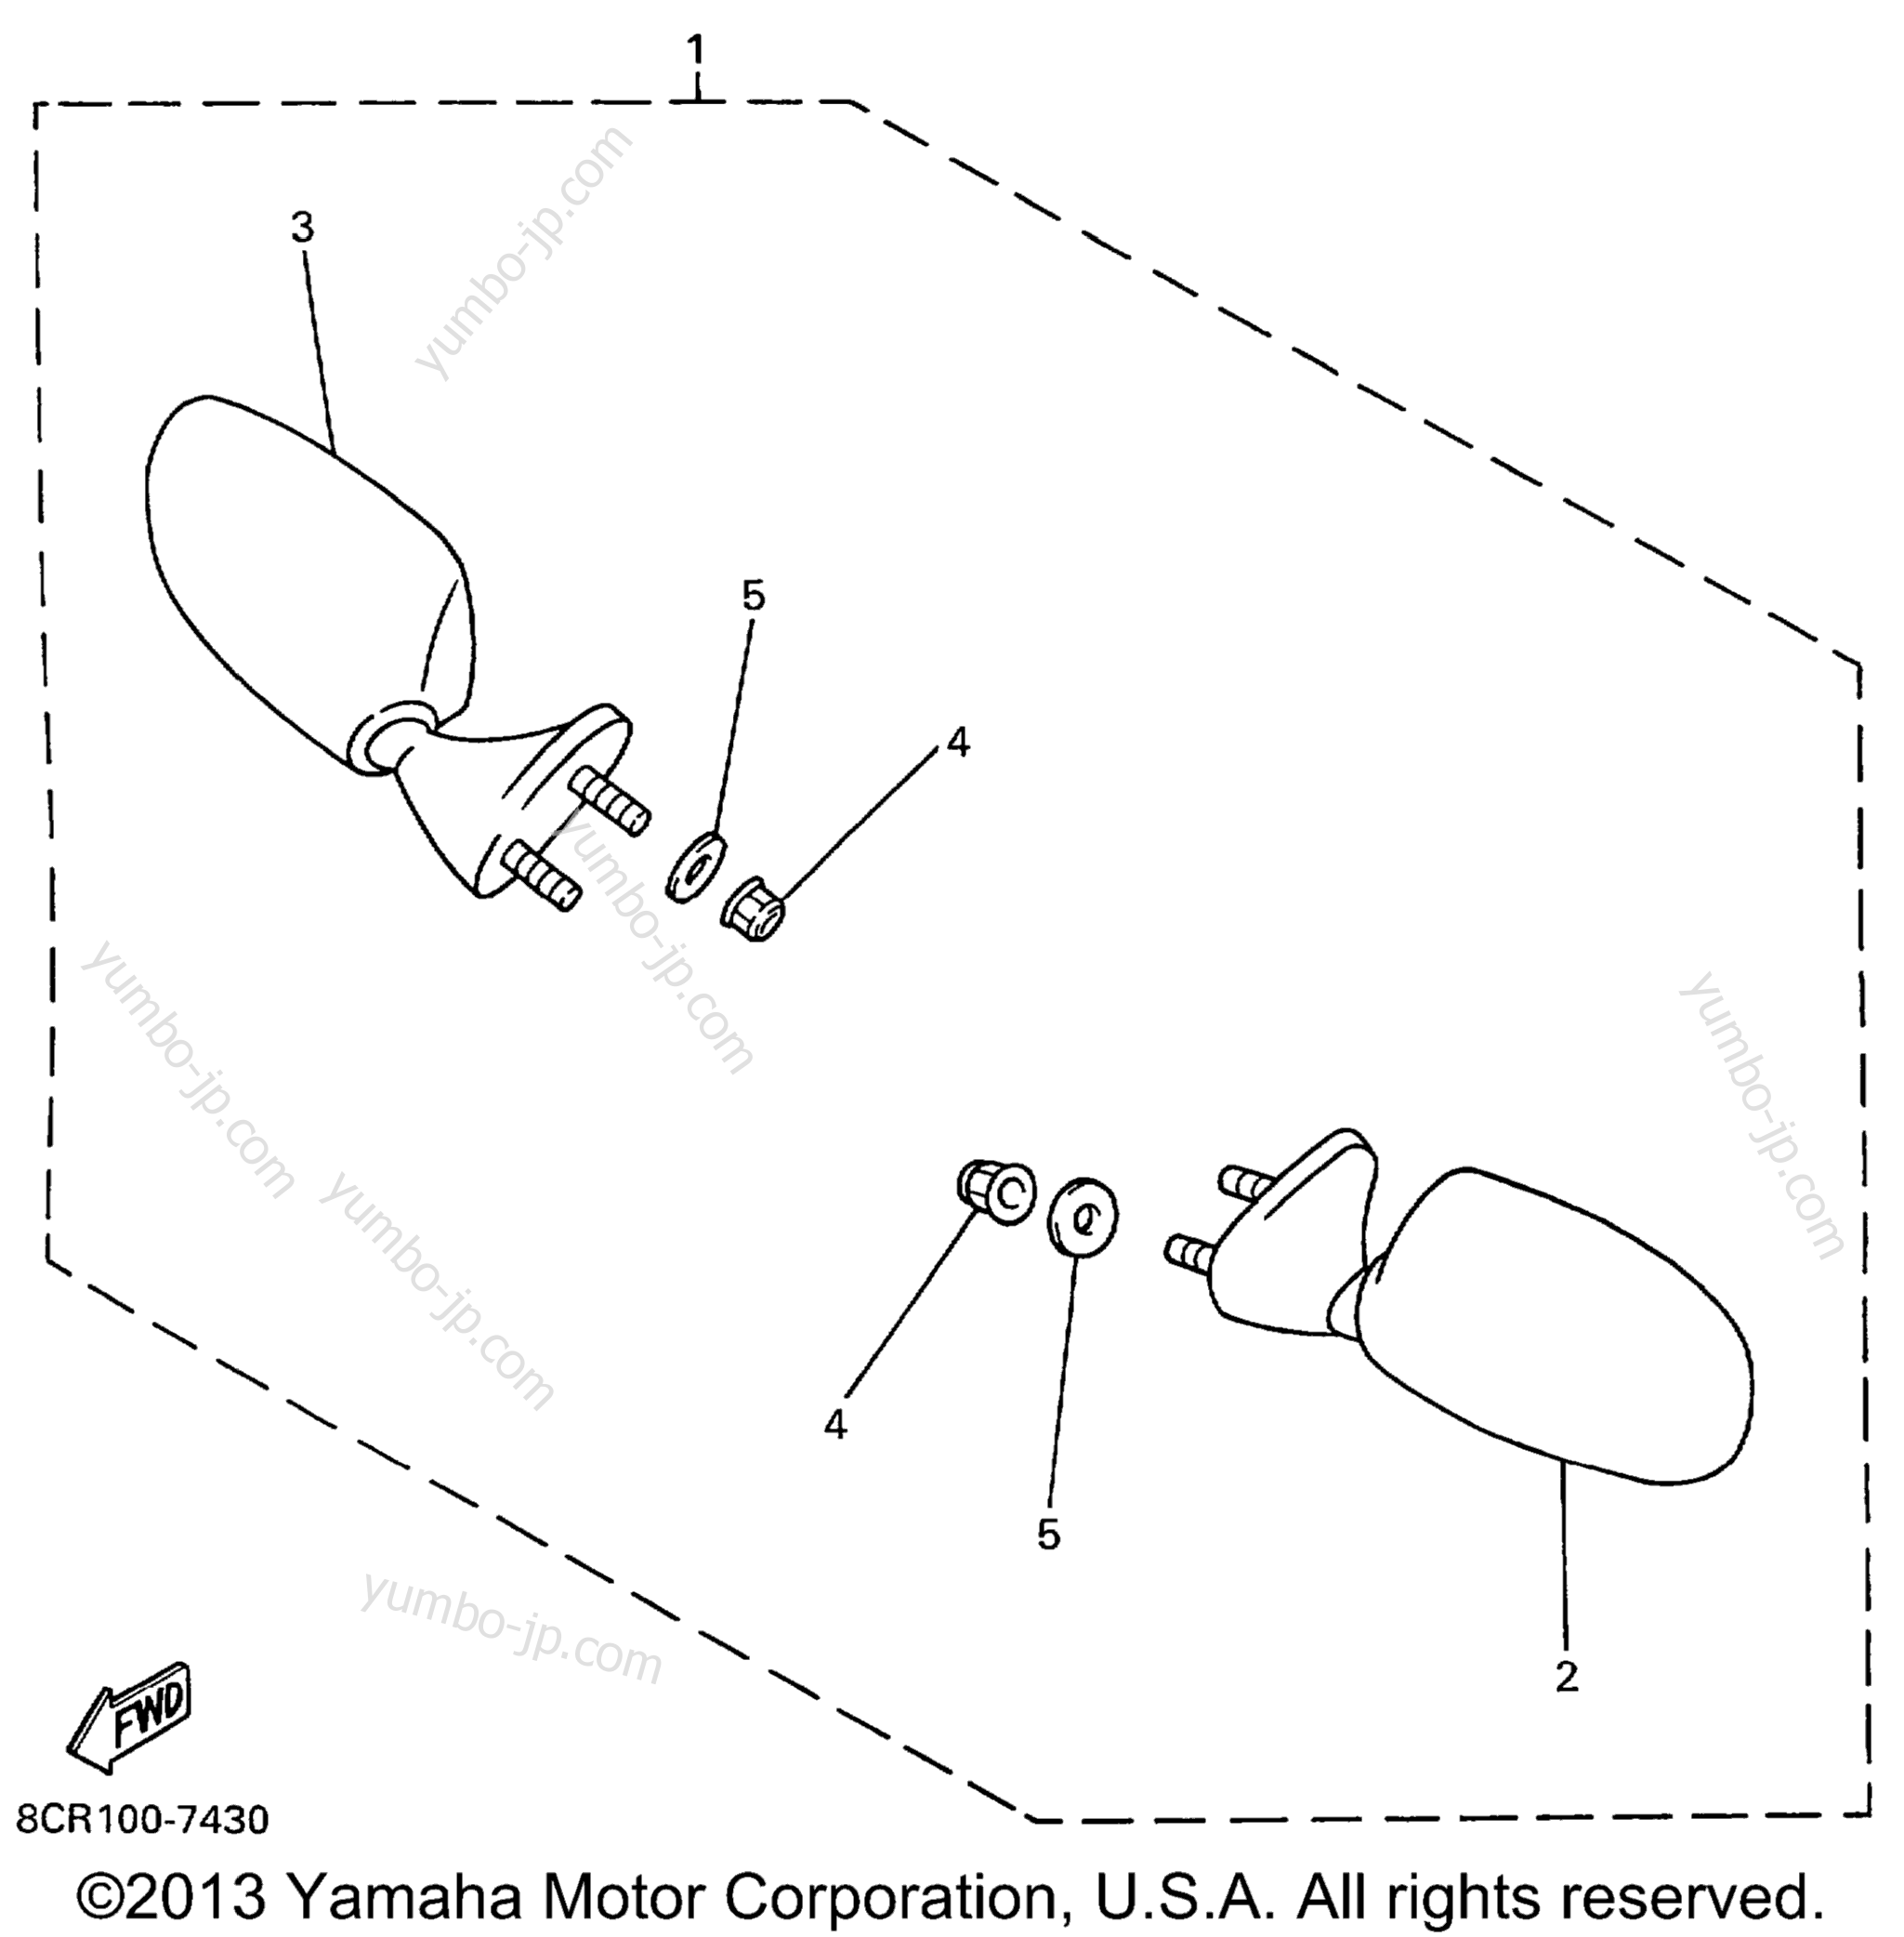 Alternate Rear View Mirror for snowmobiles YAMAHA VMAX 500 (VX500C) 1999 year